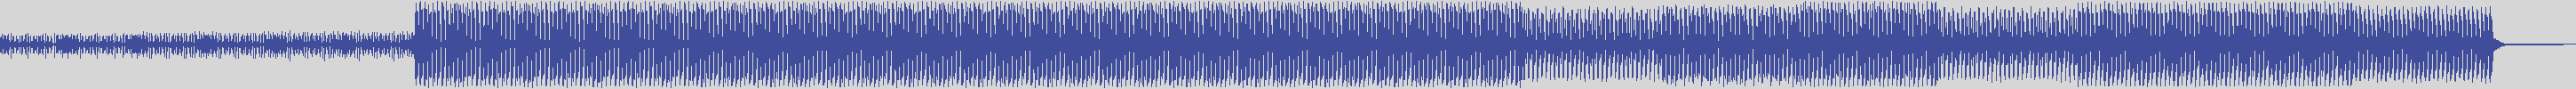 nf_boyz_records [NFY055] Eddy Carter - Understand [Tribal Mix] audio wave form